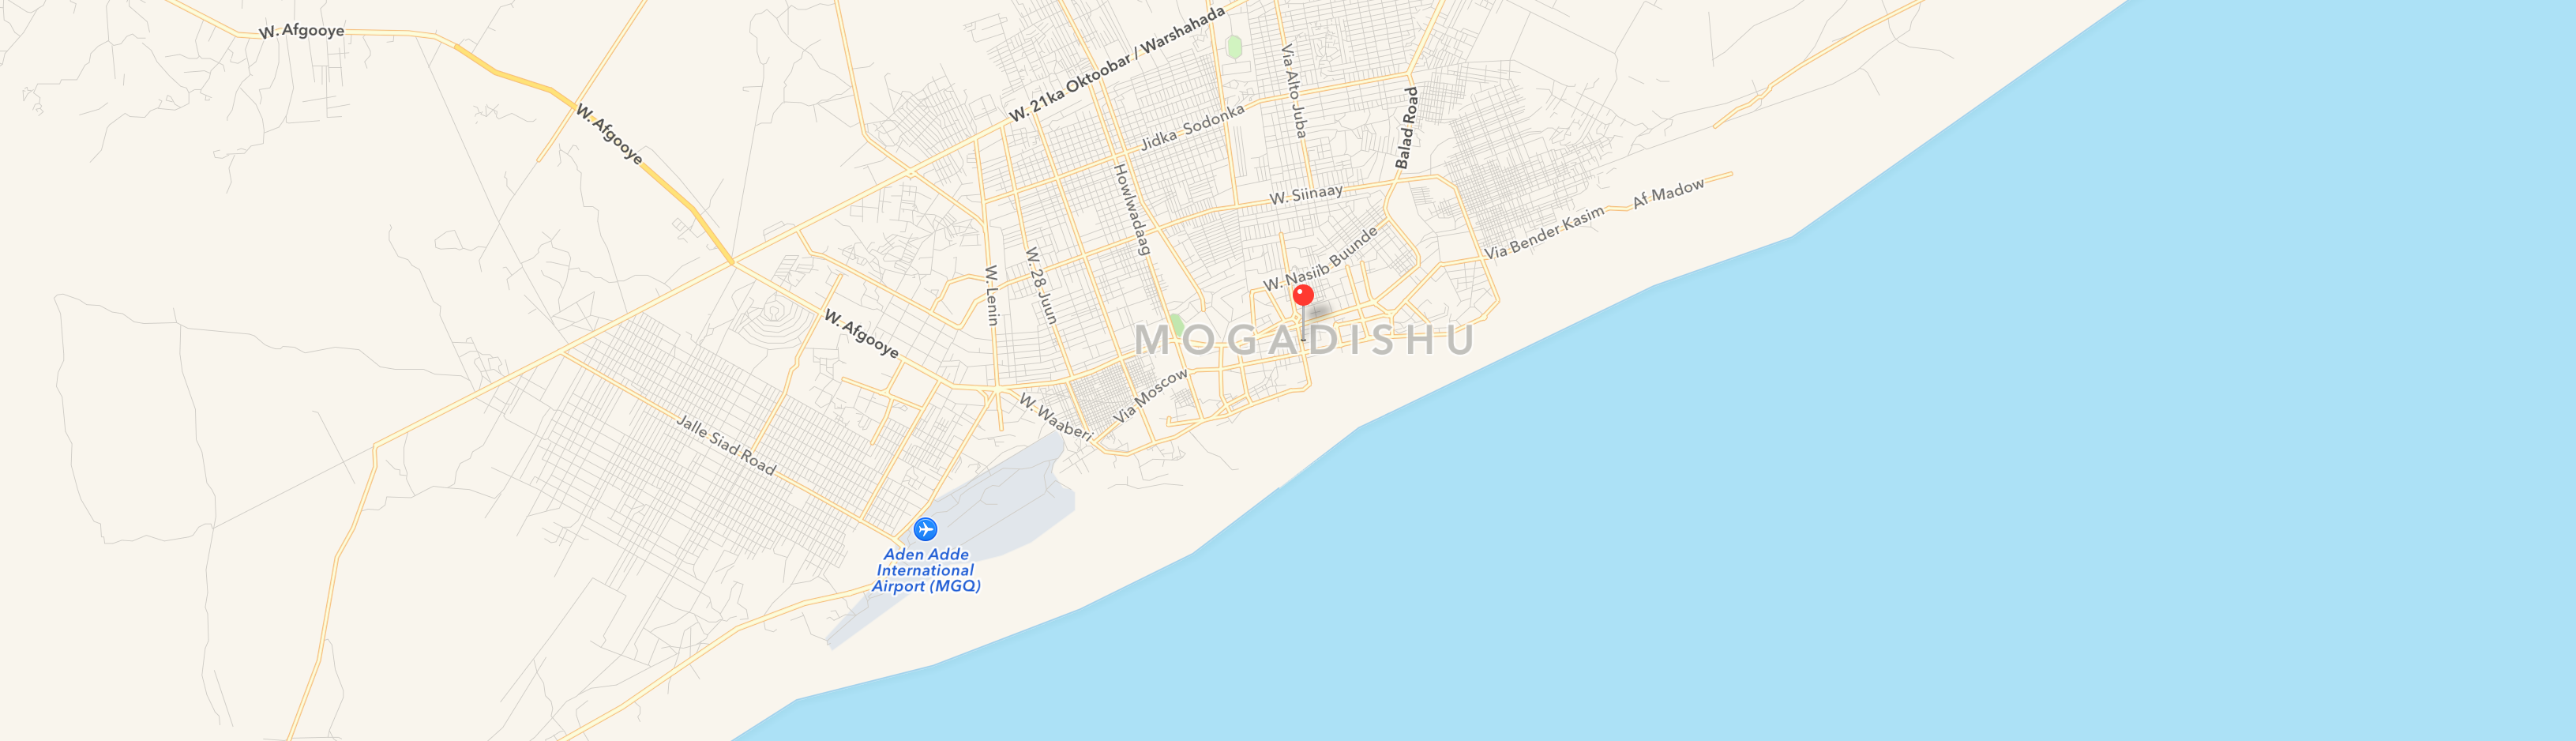 Rebuilding Mogadishu with Local Knowledge